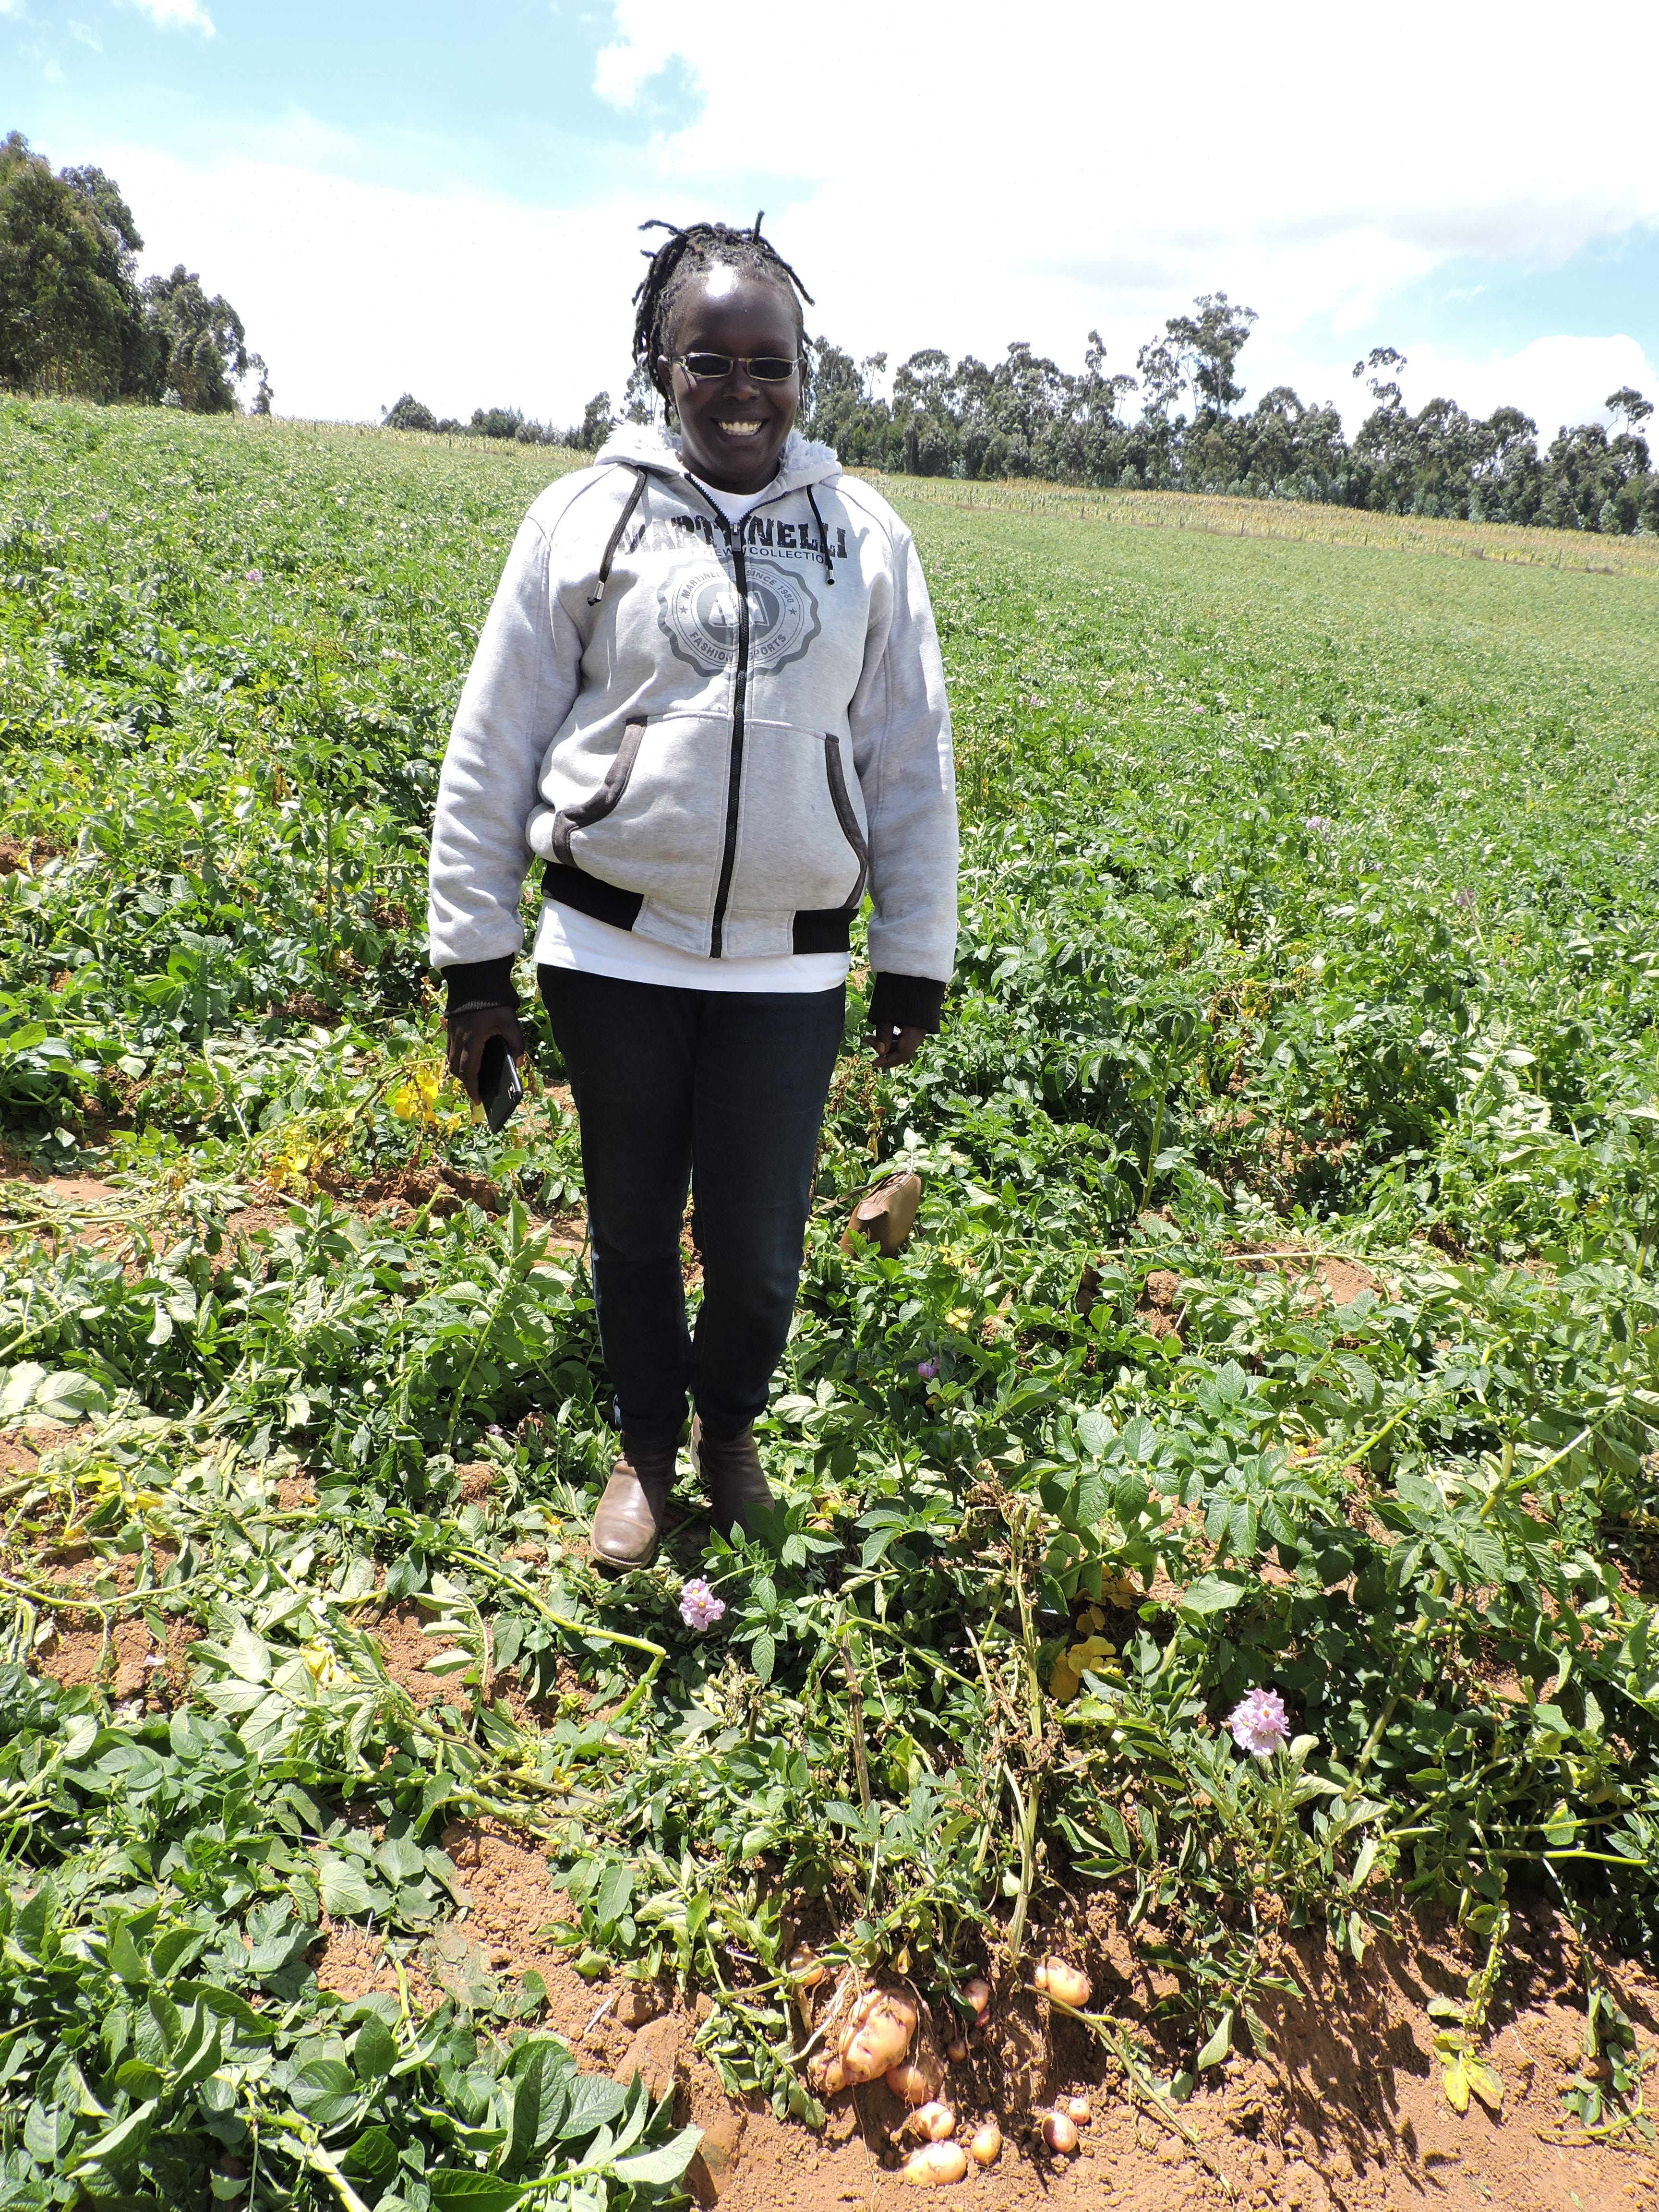 Farmers benefitting from Irish Aid support to potato farming in Nyandarua County, Kenya